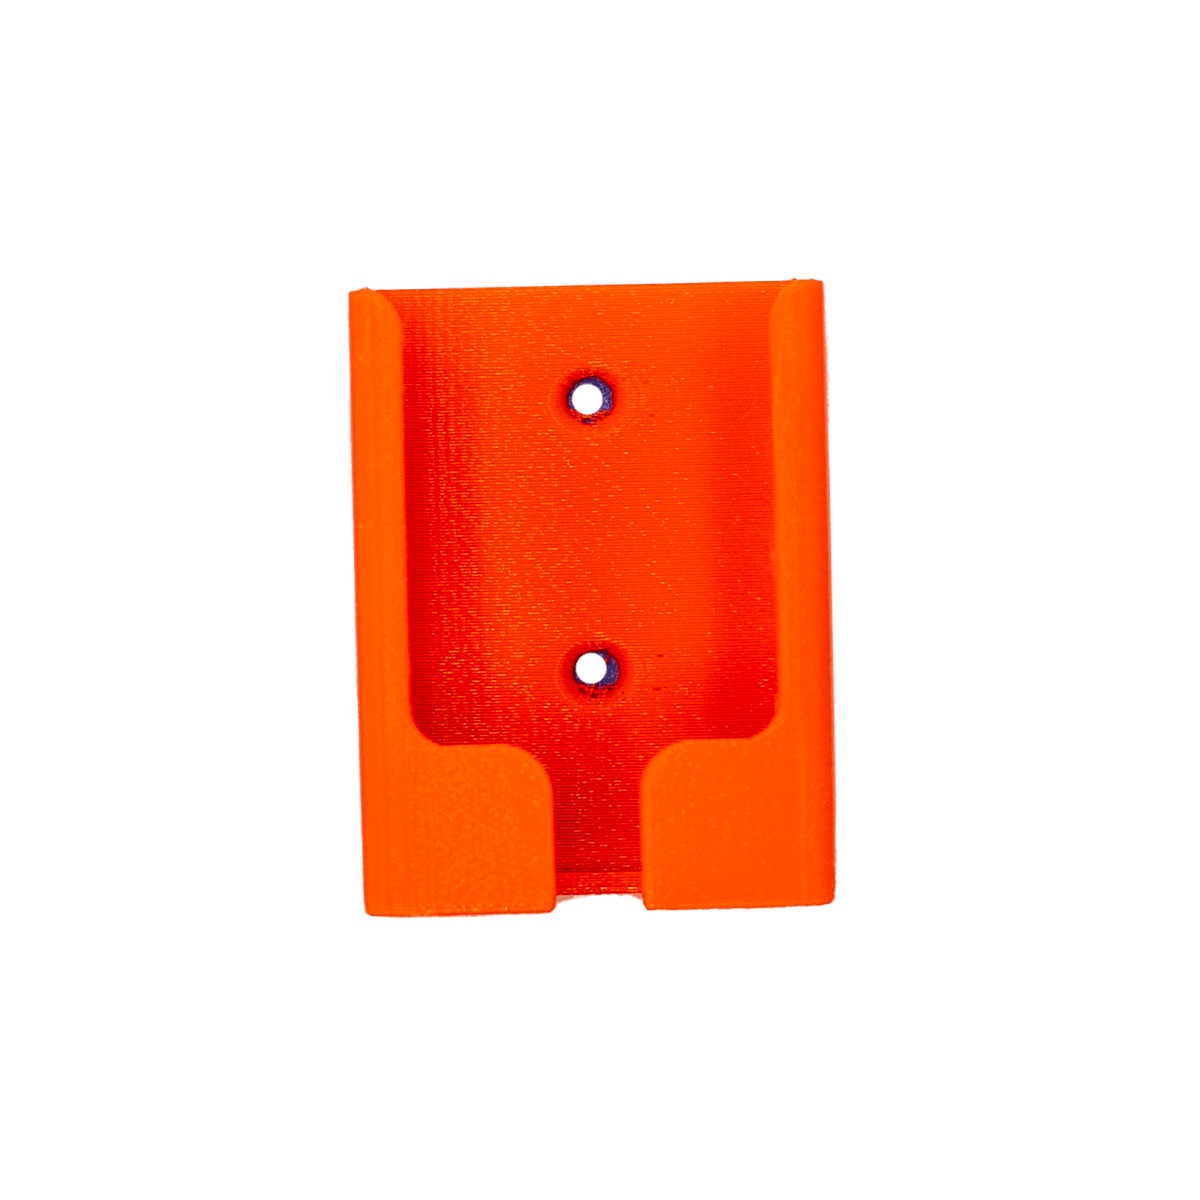 INKBIRD Thermostat Controller Bracket - Printed Reef